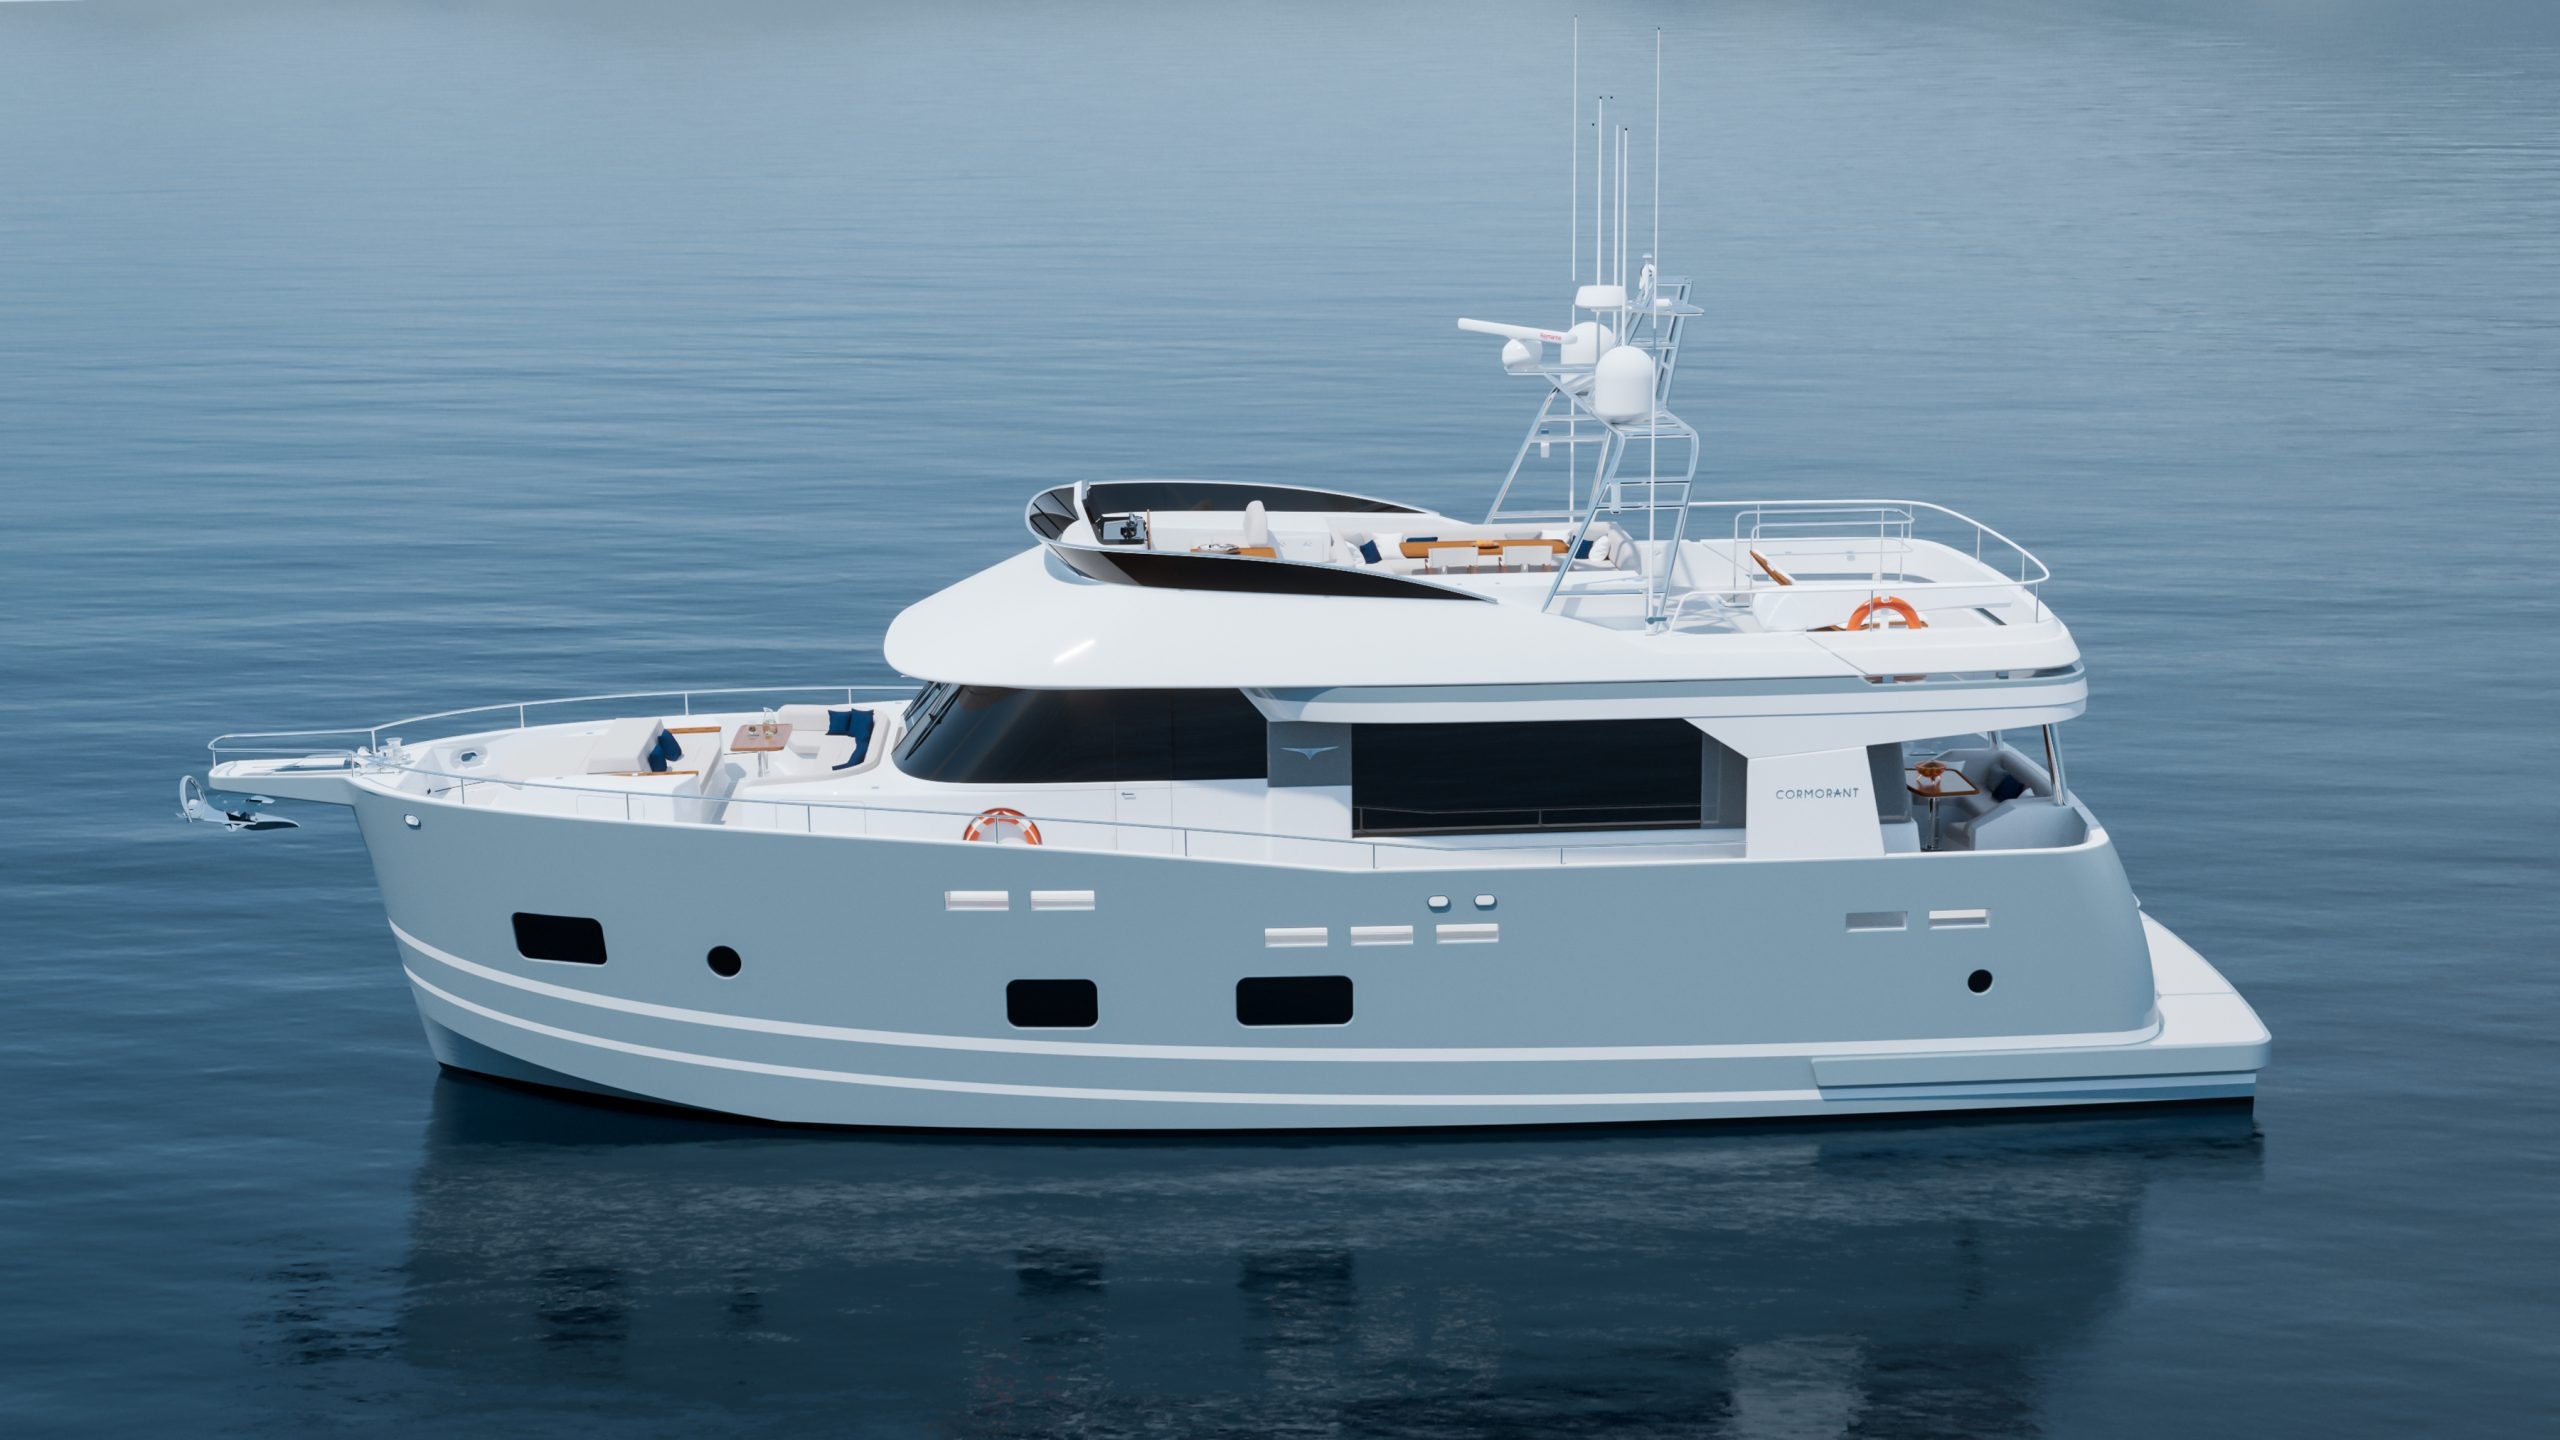 Pleasure Boat: Using a recreational motor vessel for cruises, Lake, Sea. 2560x1440 HD Background.